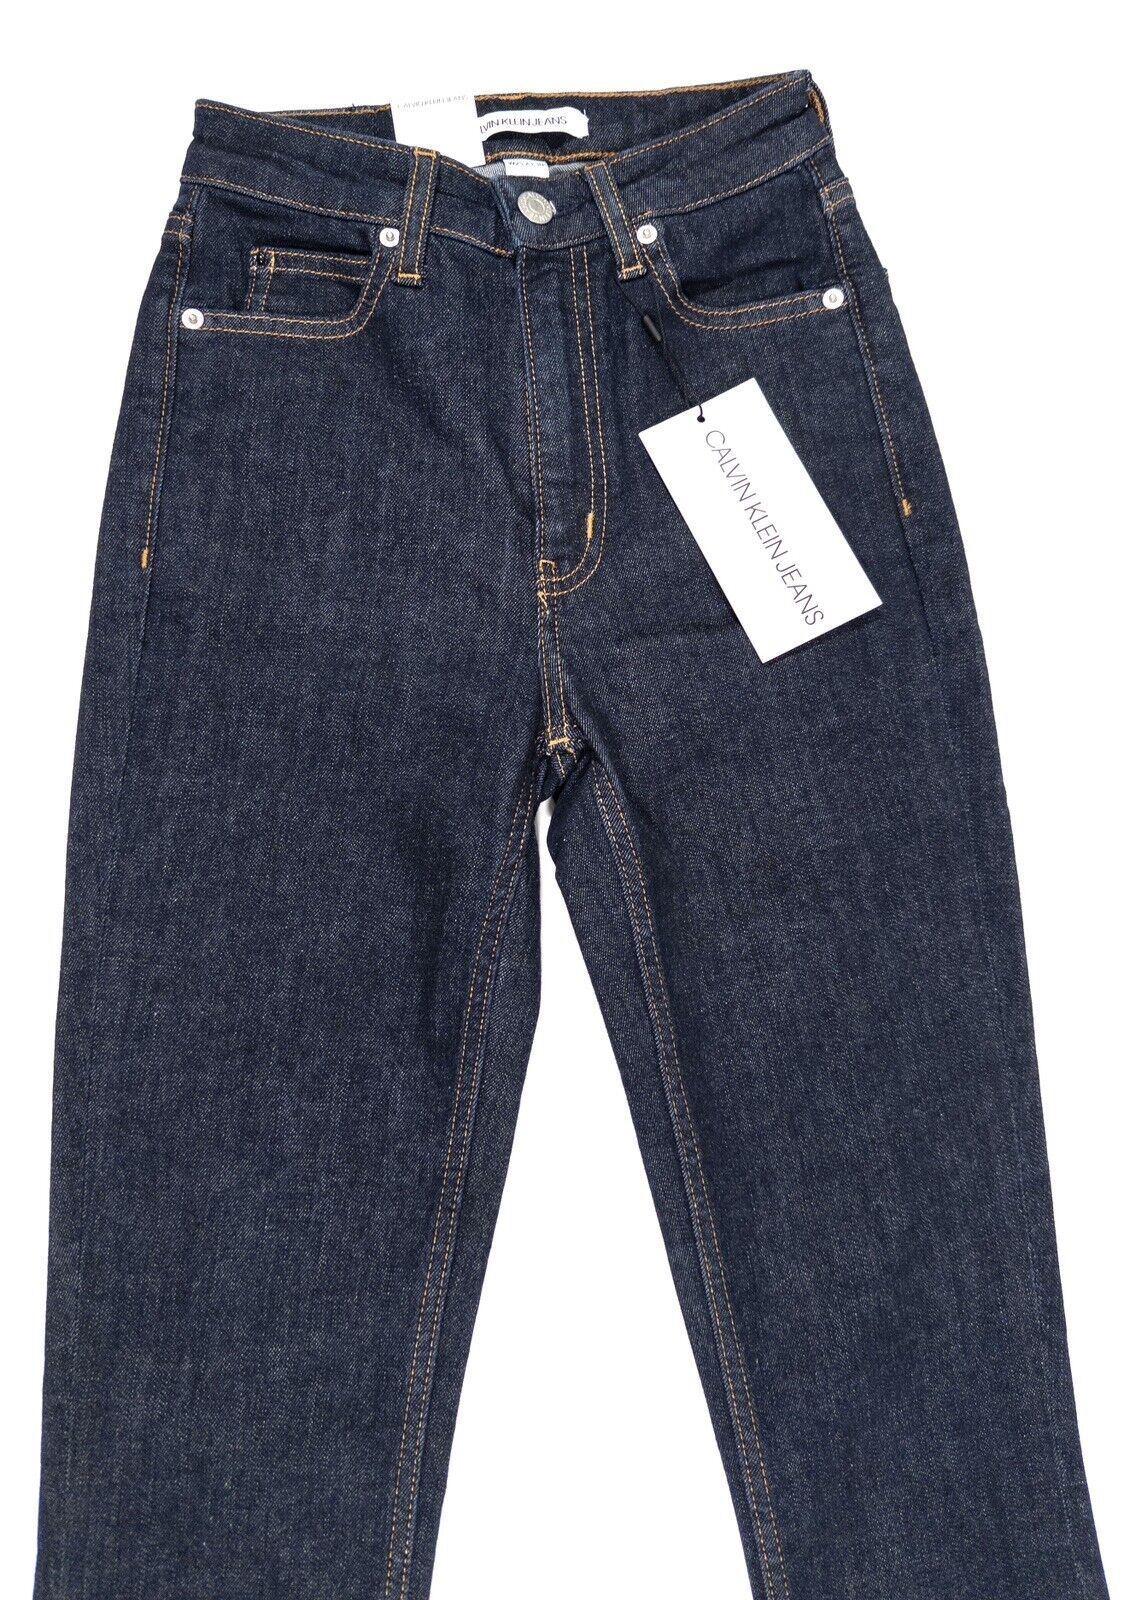 CALVIN KLEIN Women's Dark Blue Jeans High Rise Skinny Size UK W25 L30